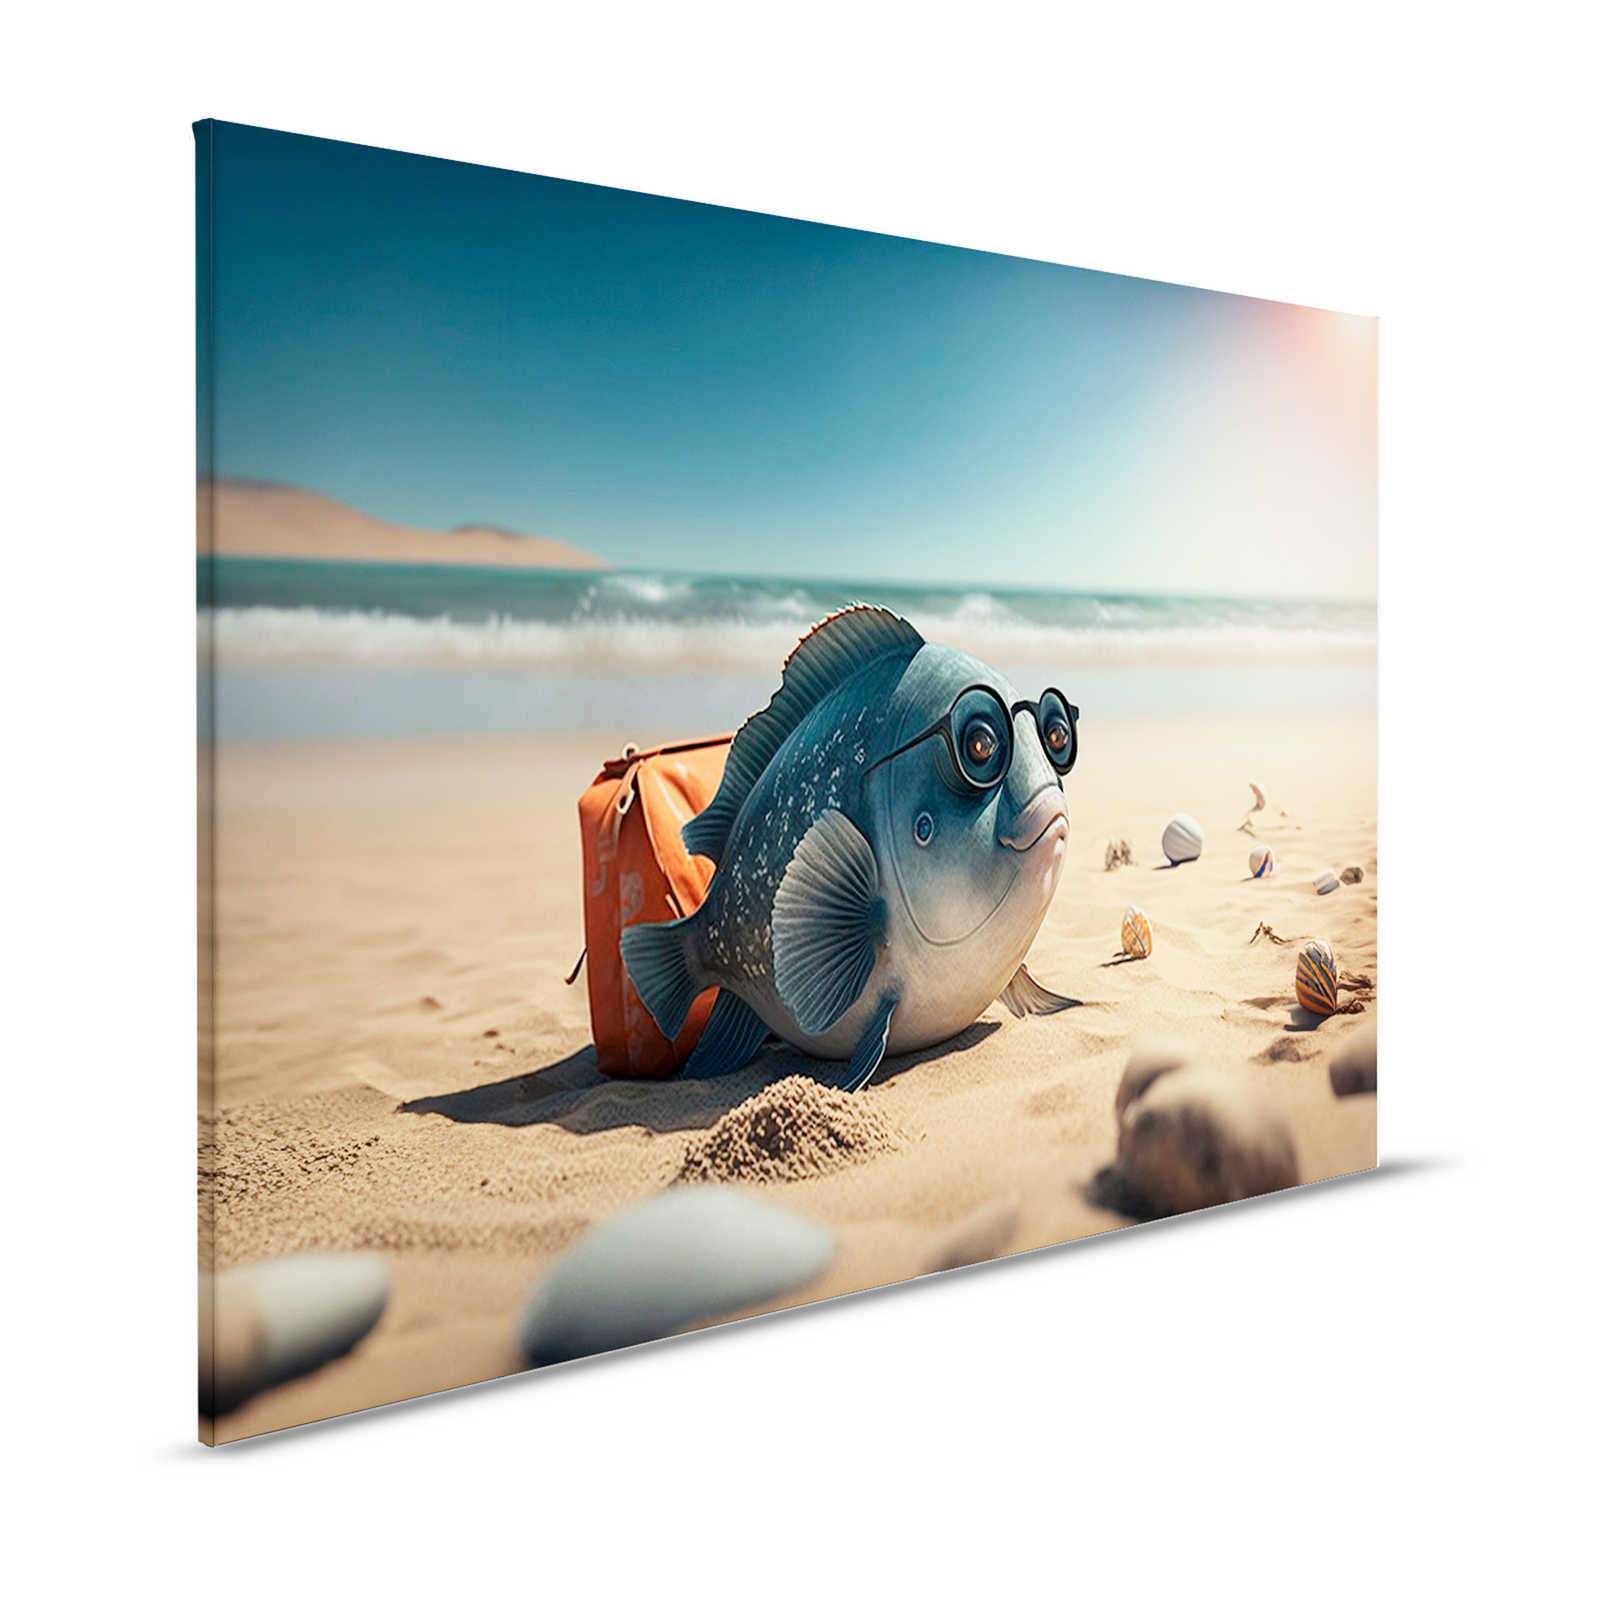 Toile KI »Fishy Beachday« - 120 cm x 80 cm
